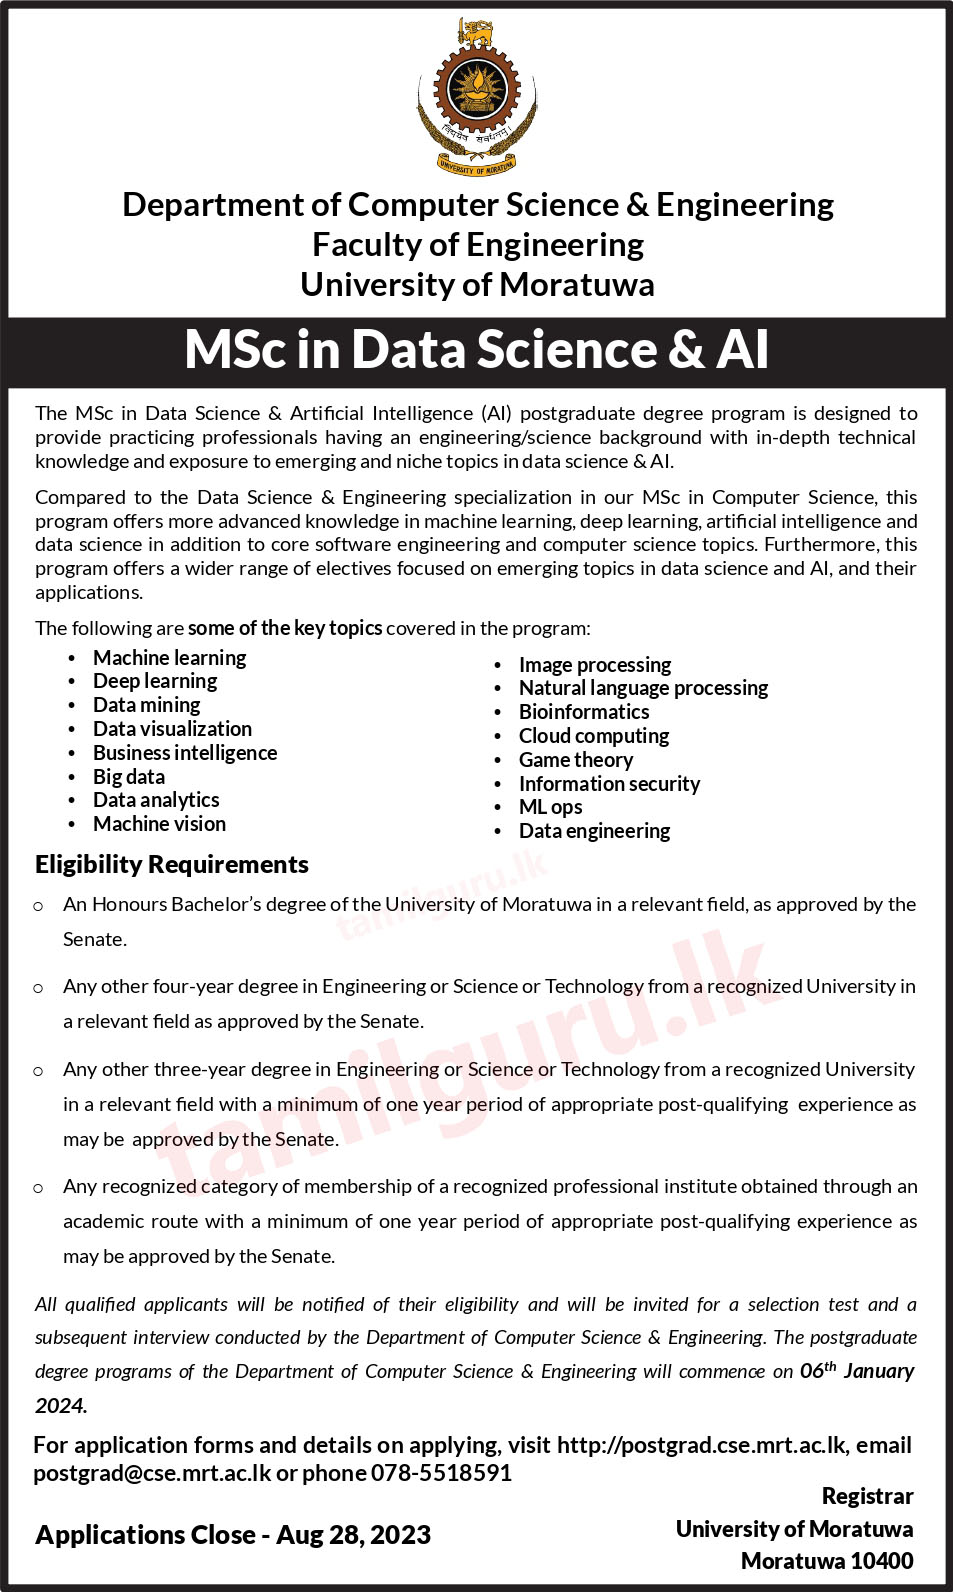 MSc in Data Science & Artificial Intelligence (AI) 2023 - University of Moratuwa